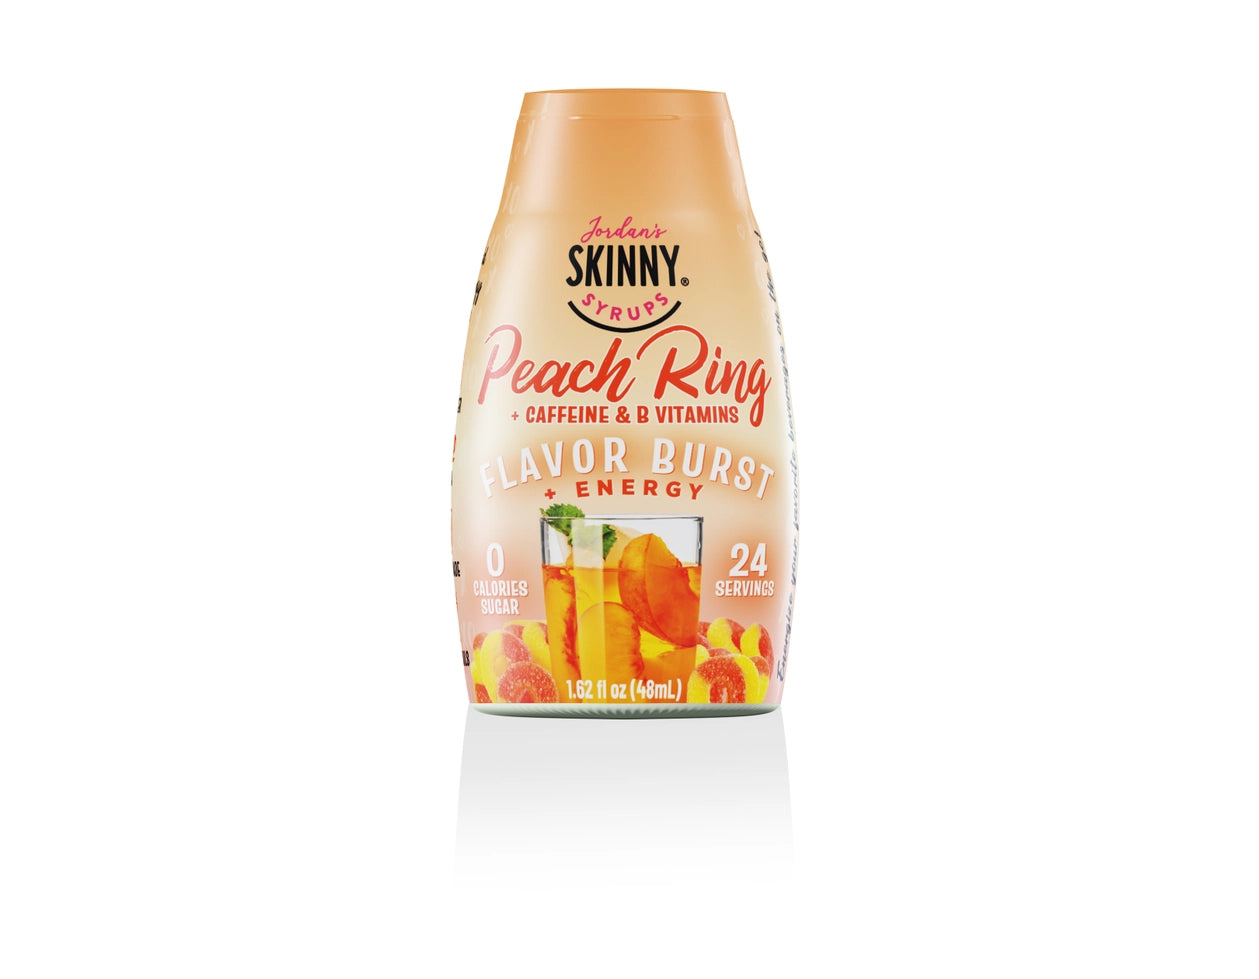 Peach Ring - Energy Flavor Burst